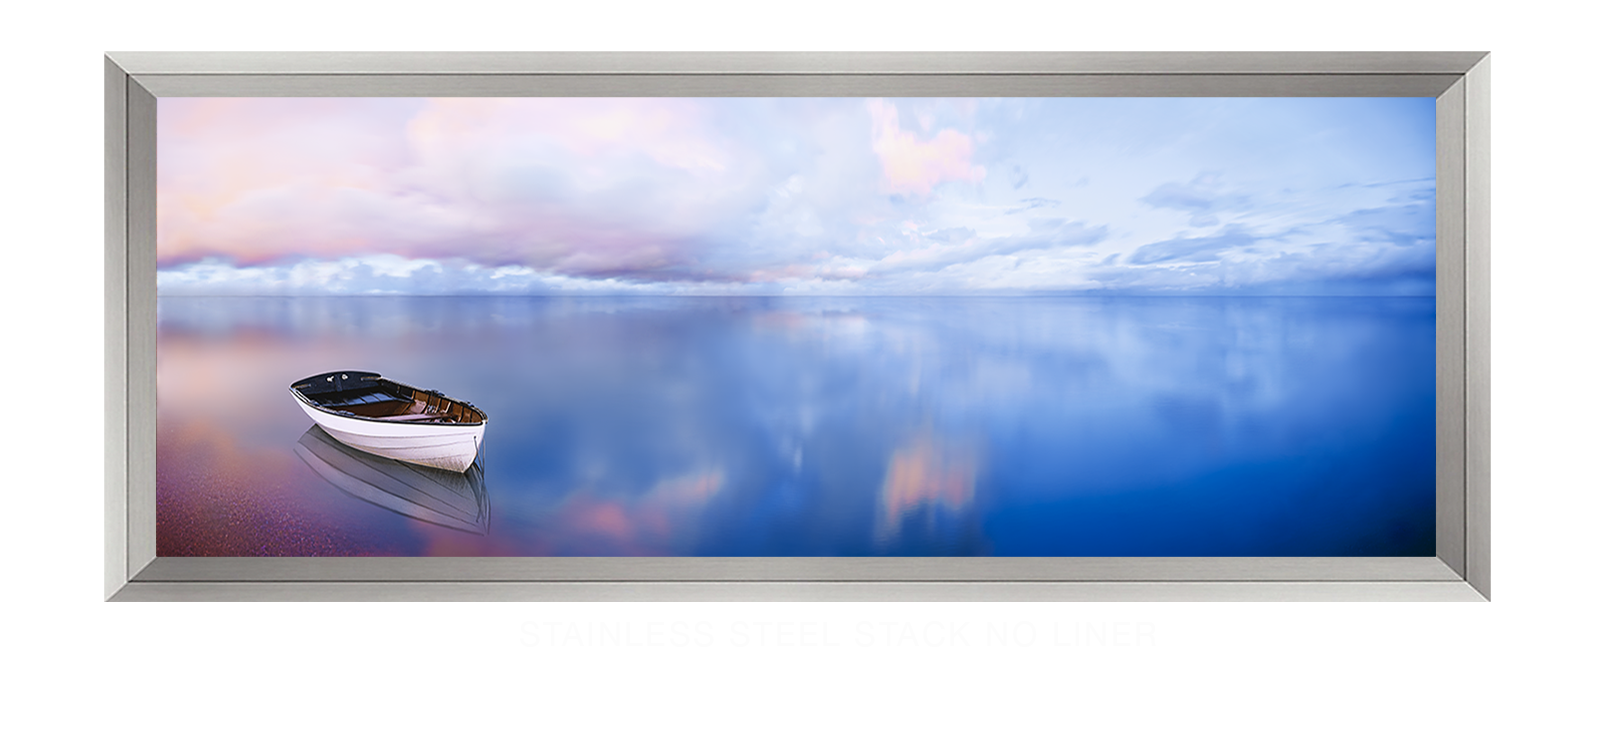 7BLUELAKEBOAT Stainless Steel Stack No Liner T